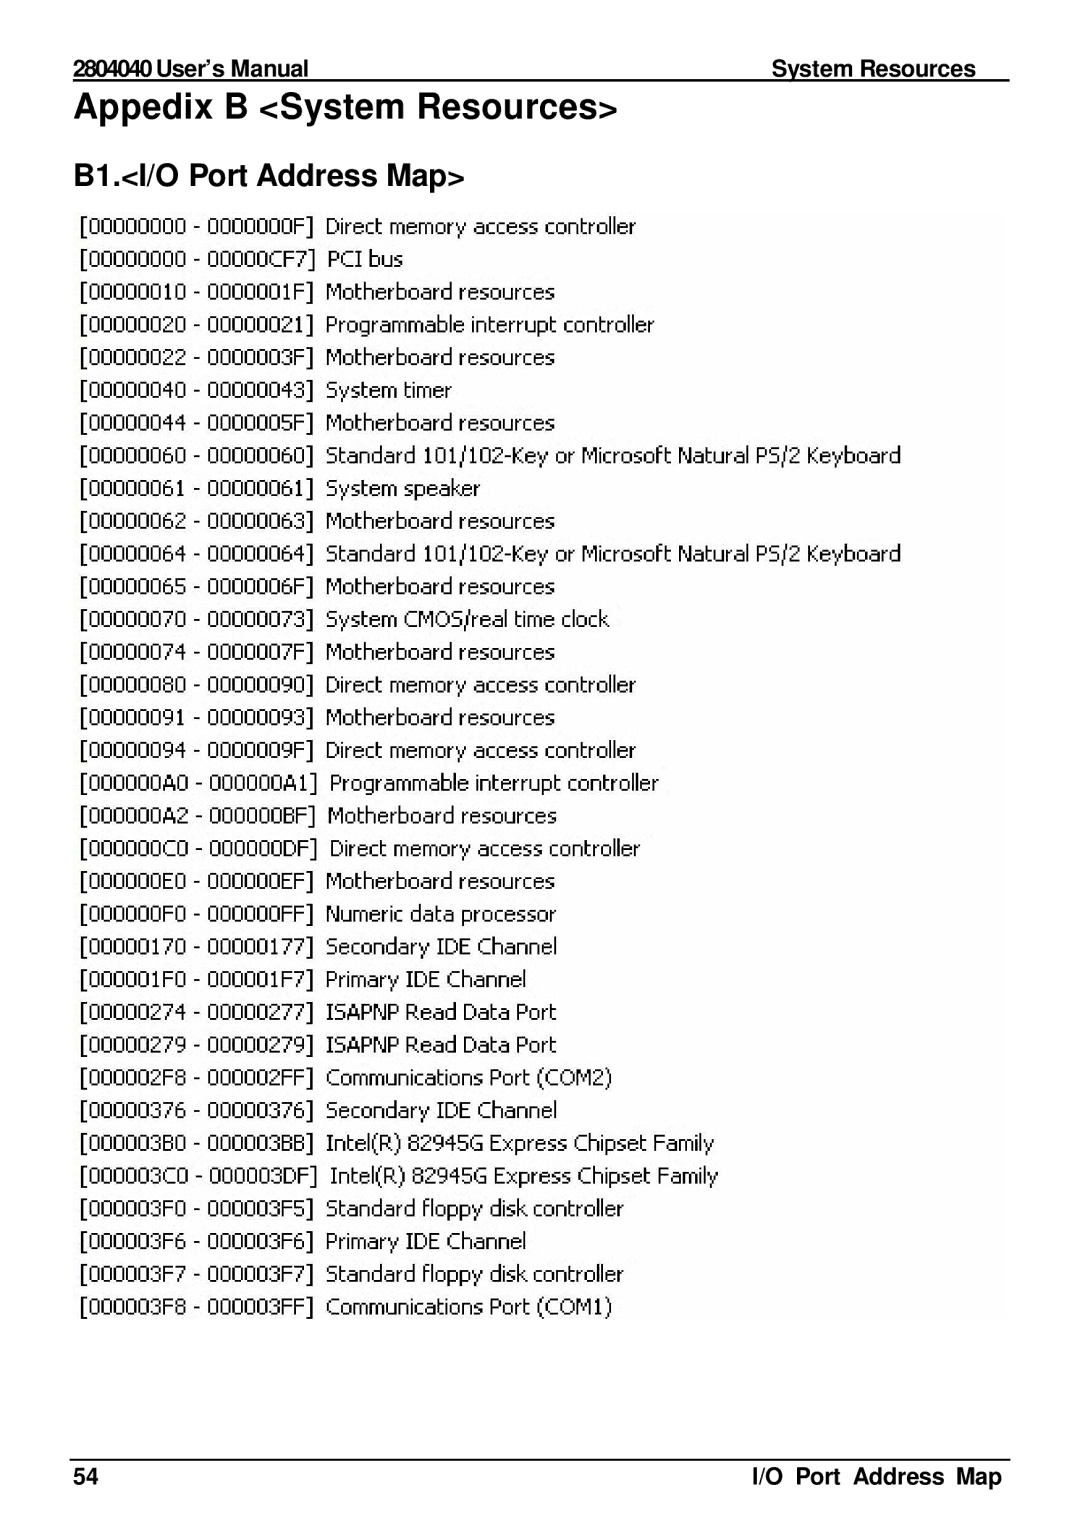 Intel 2804040 user manual Appedix B System Resources, B1.I/O Port Address Map, User’s Manual System Resources 